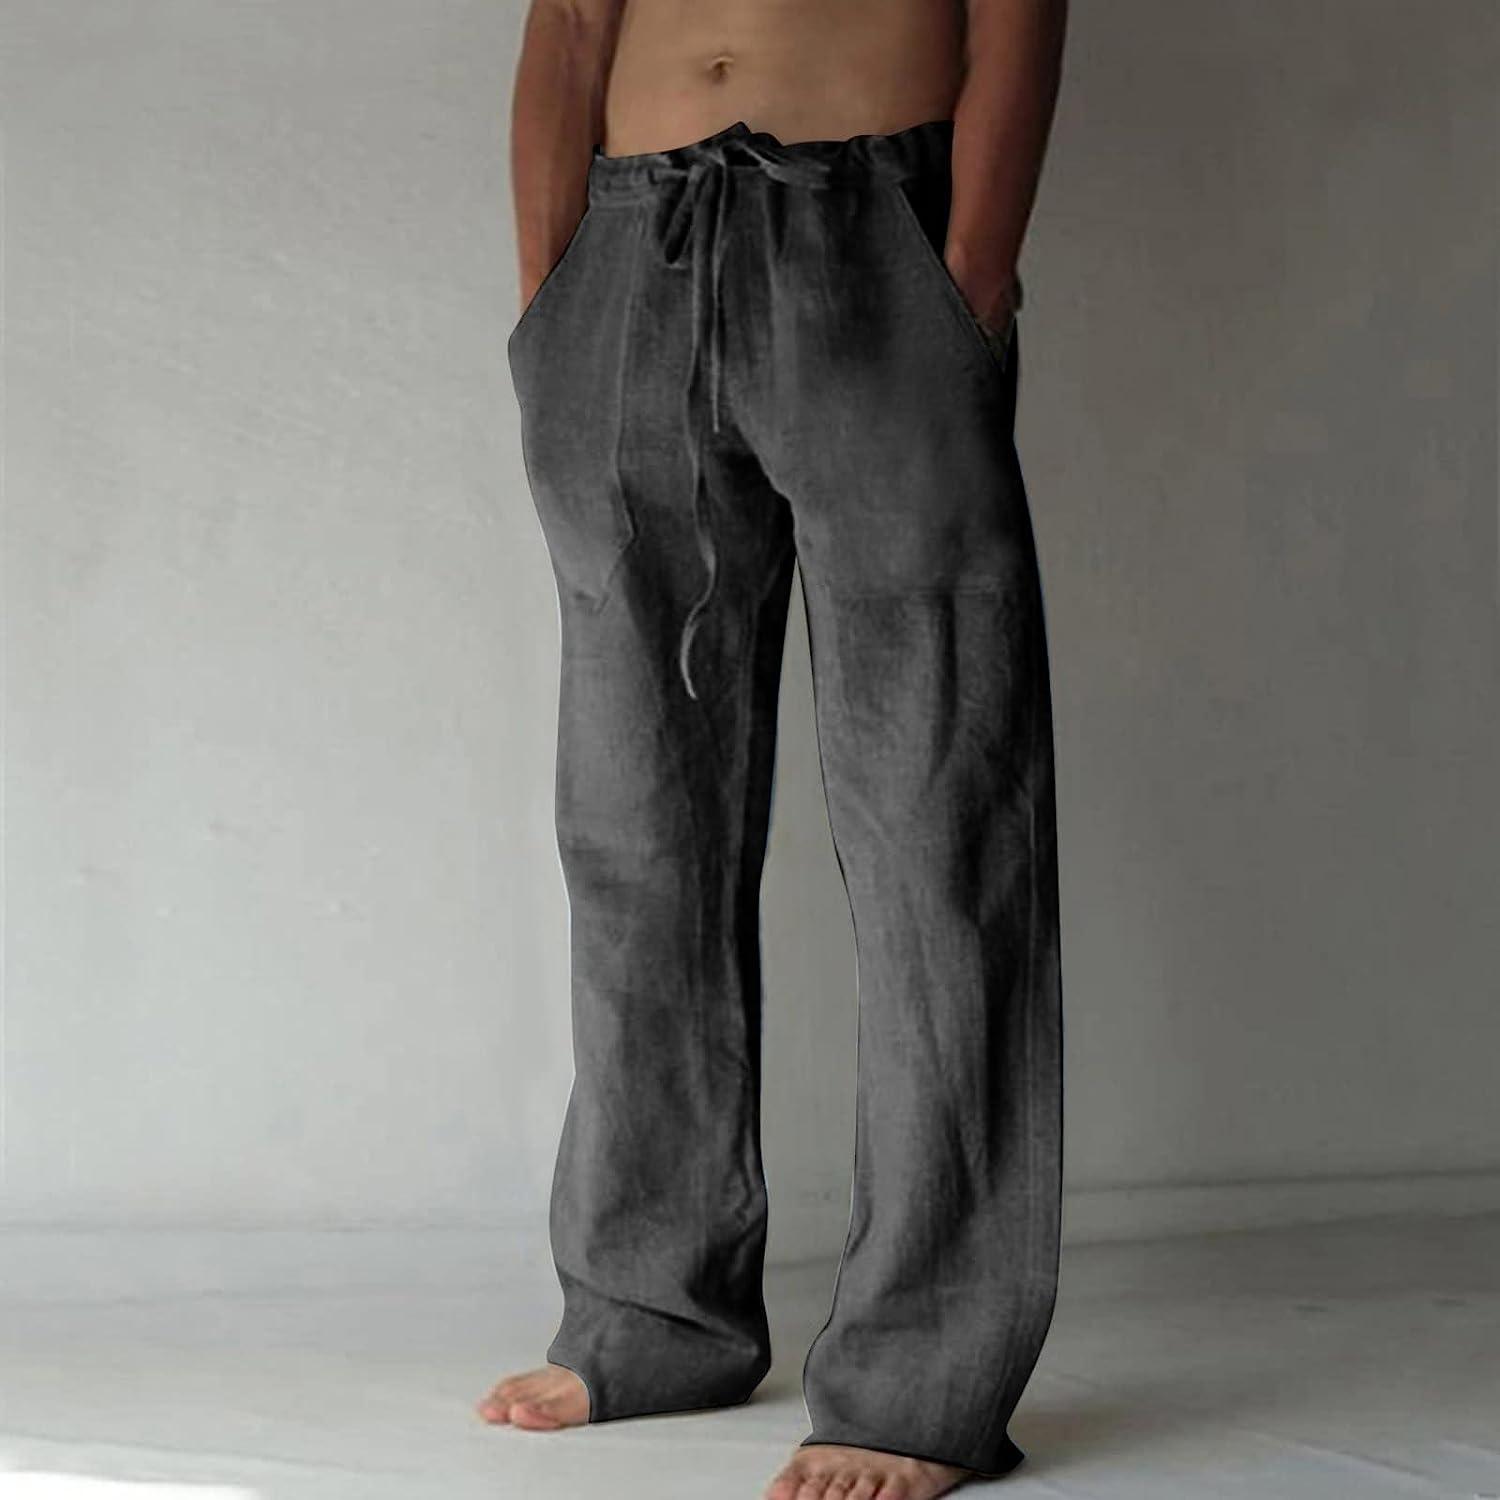 Yfashion Men Cotton Shorts Solid Color Cotton Linen Casual Cropped Pants  Summer Straight-leg Casual Beach Short Pants color